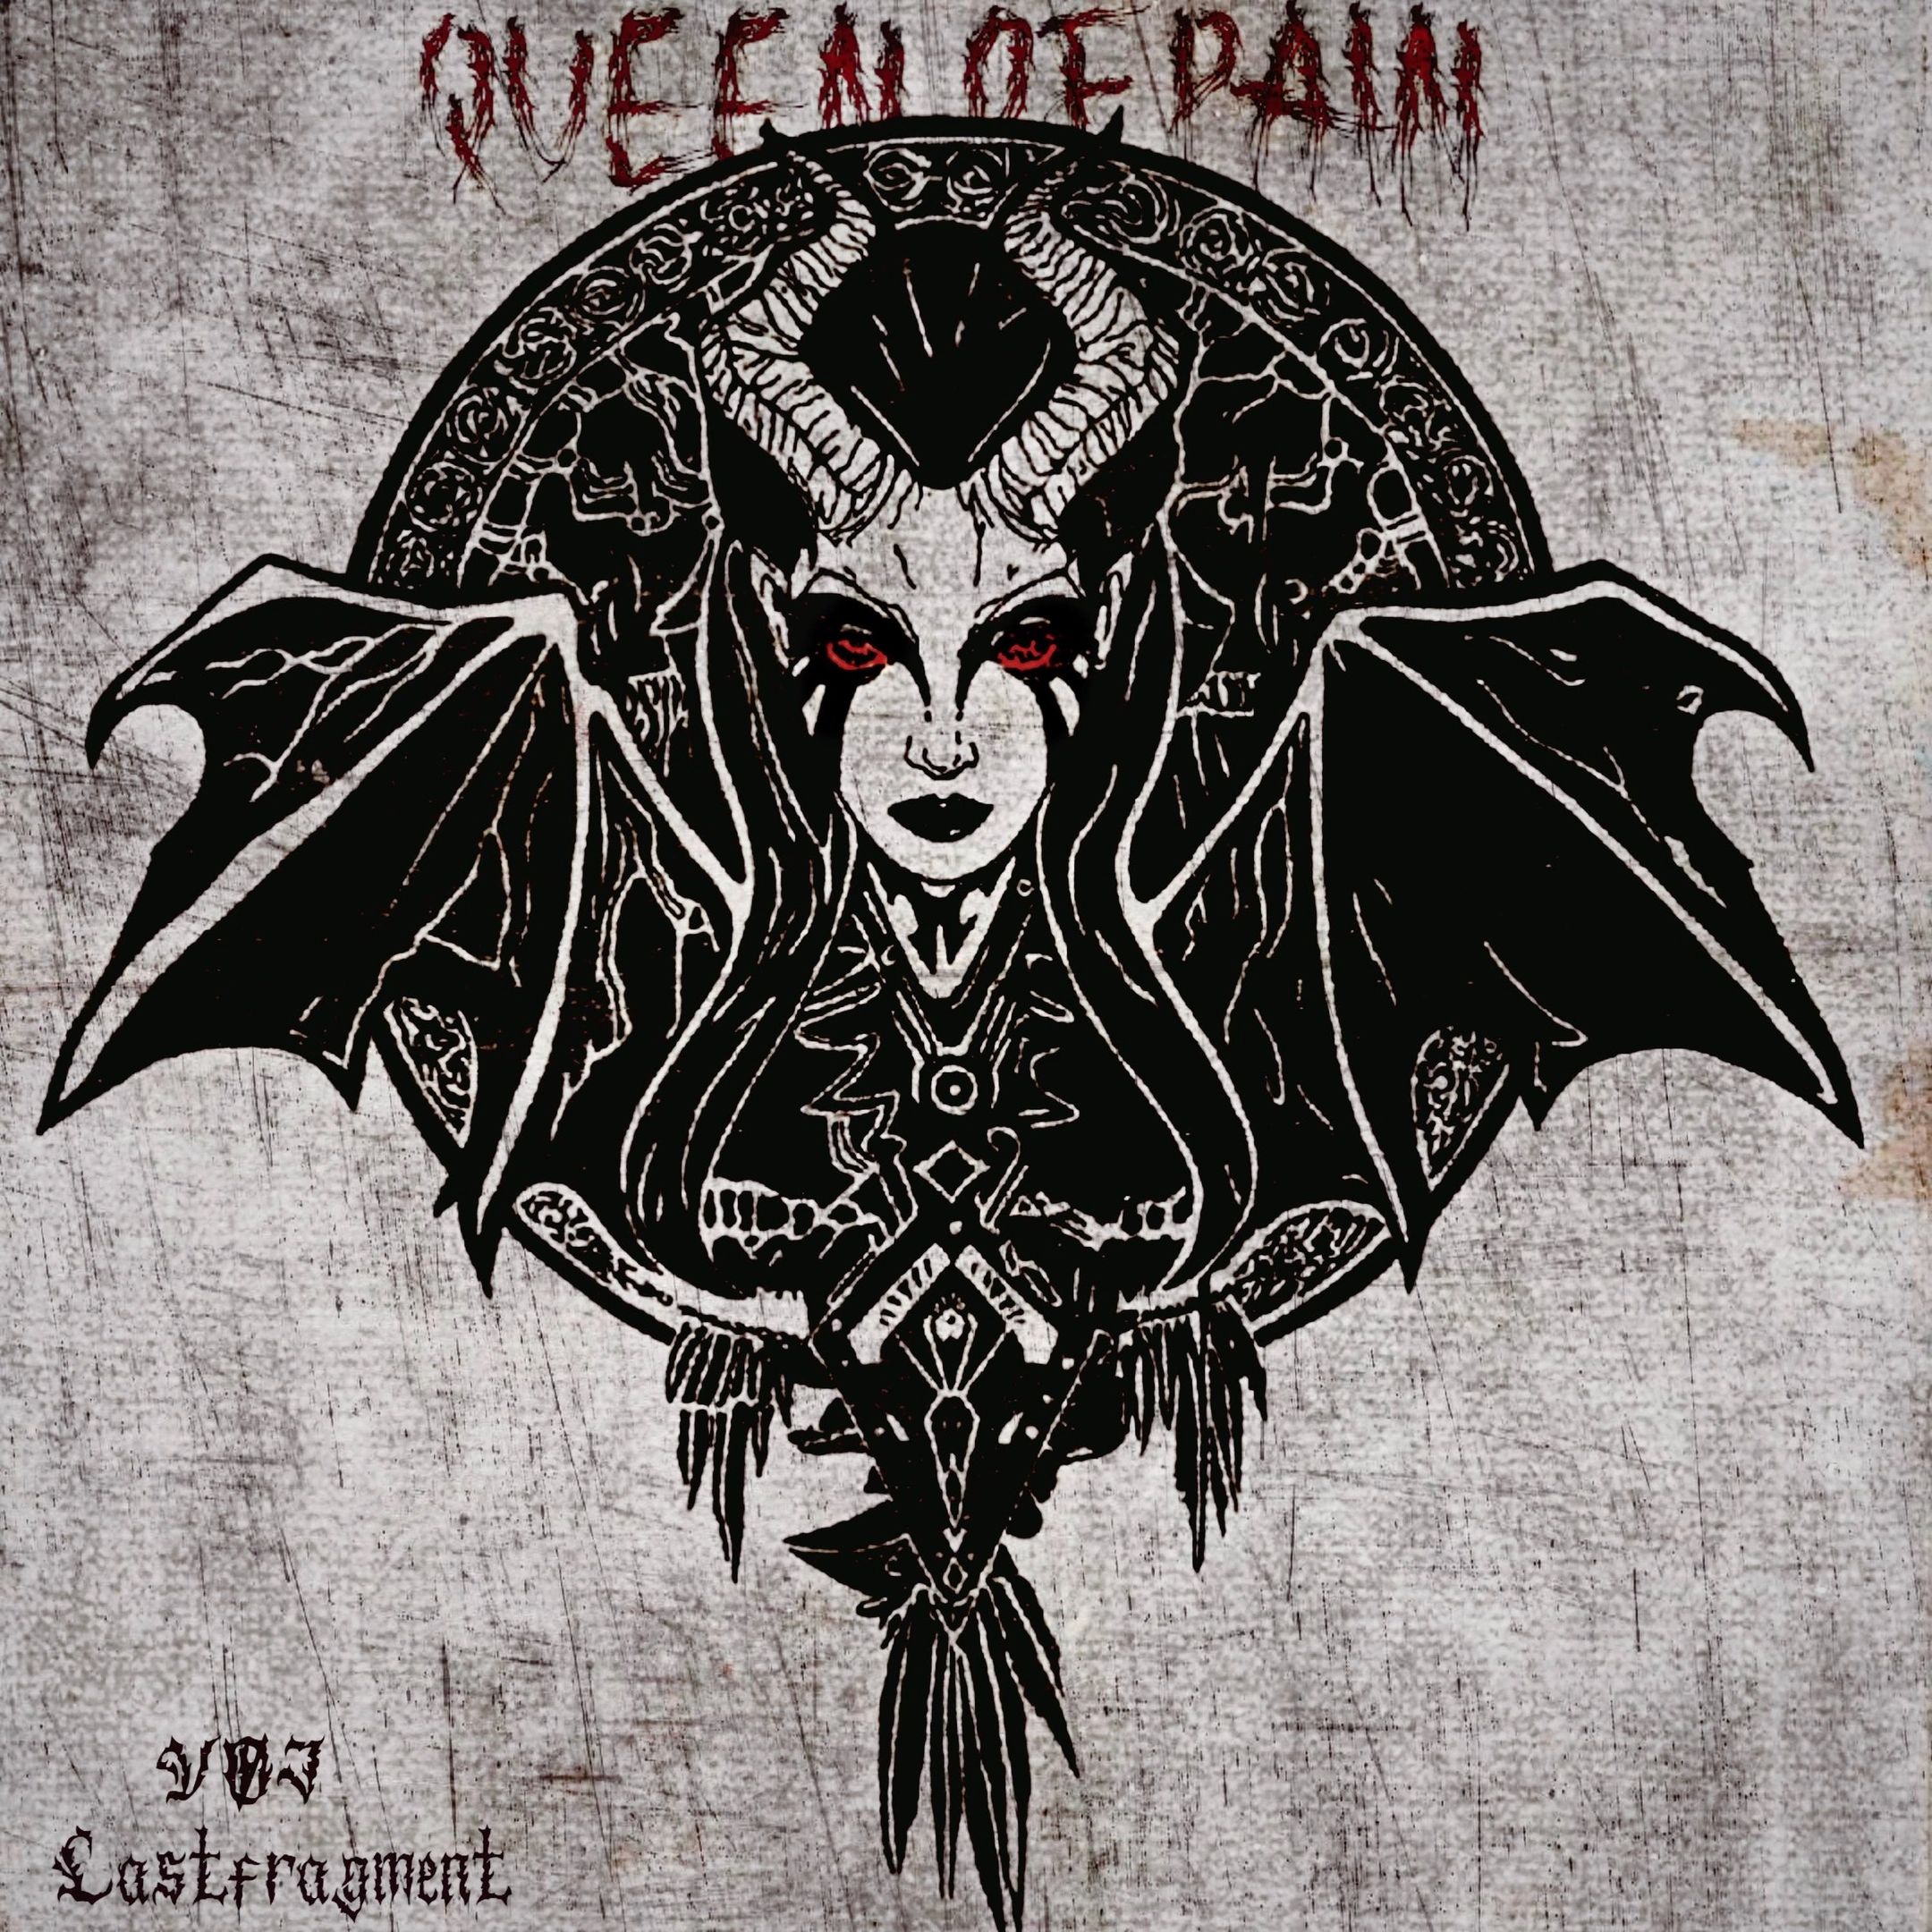 Deskargatu VØJ & Lastfragment - Queen of Pain